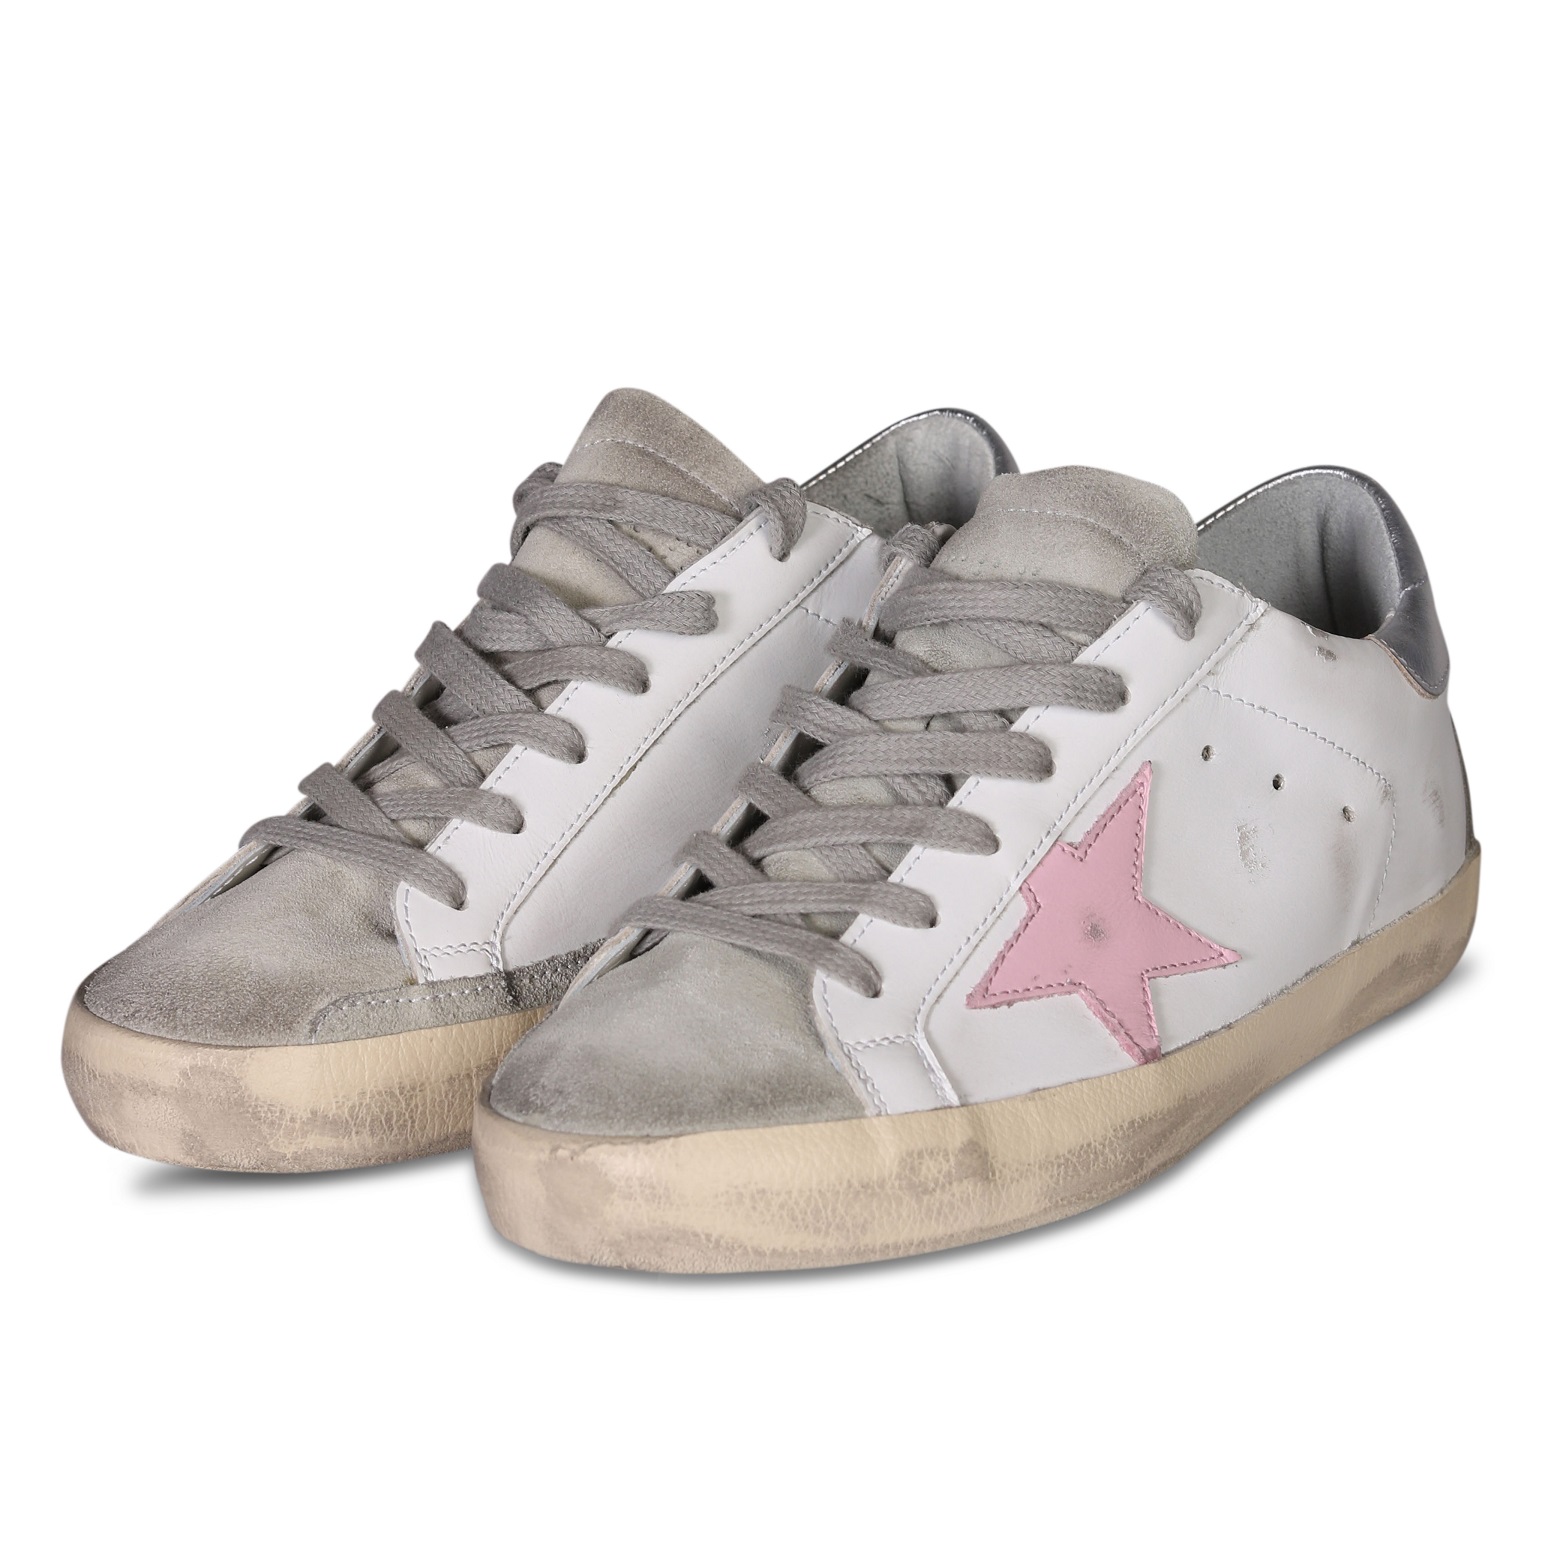 GOLDEN GOOSE Sneaker Super-Sta in White/Pink 36